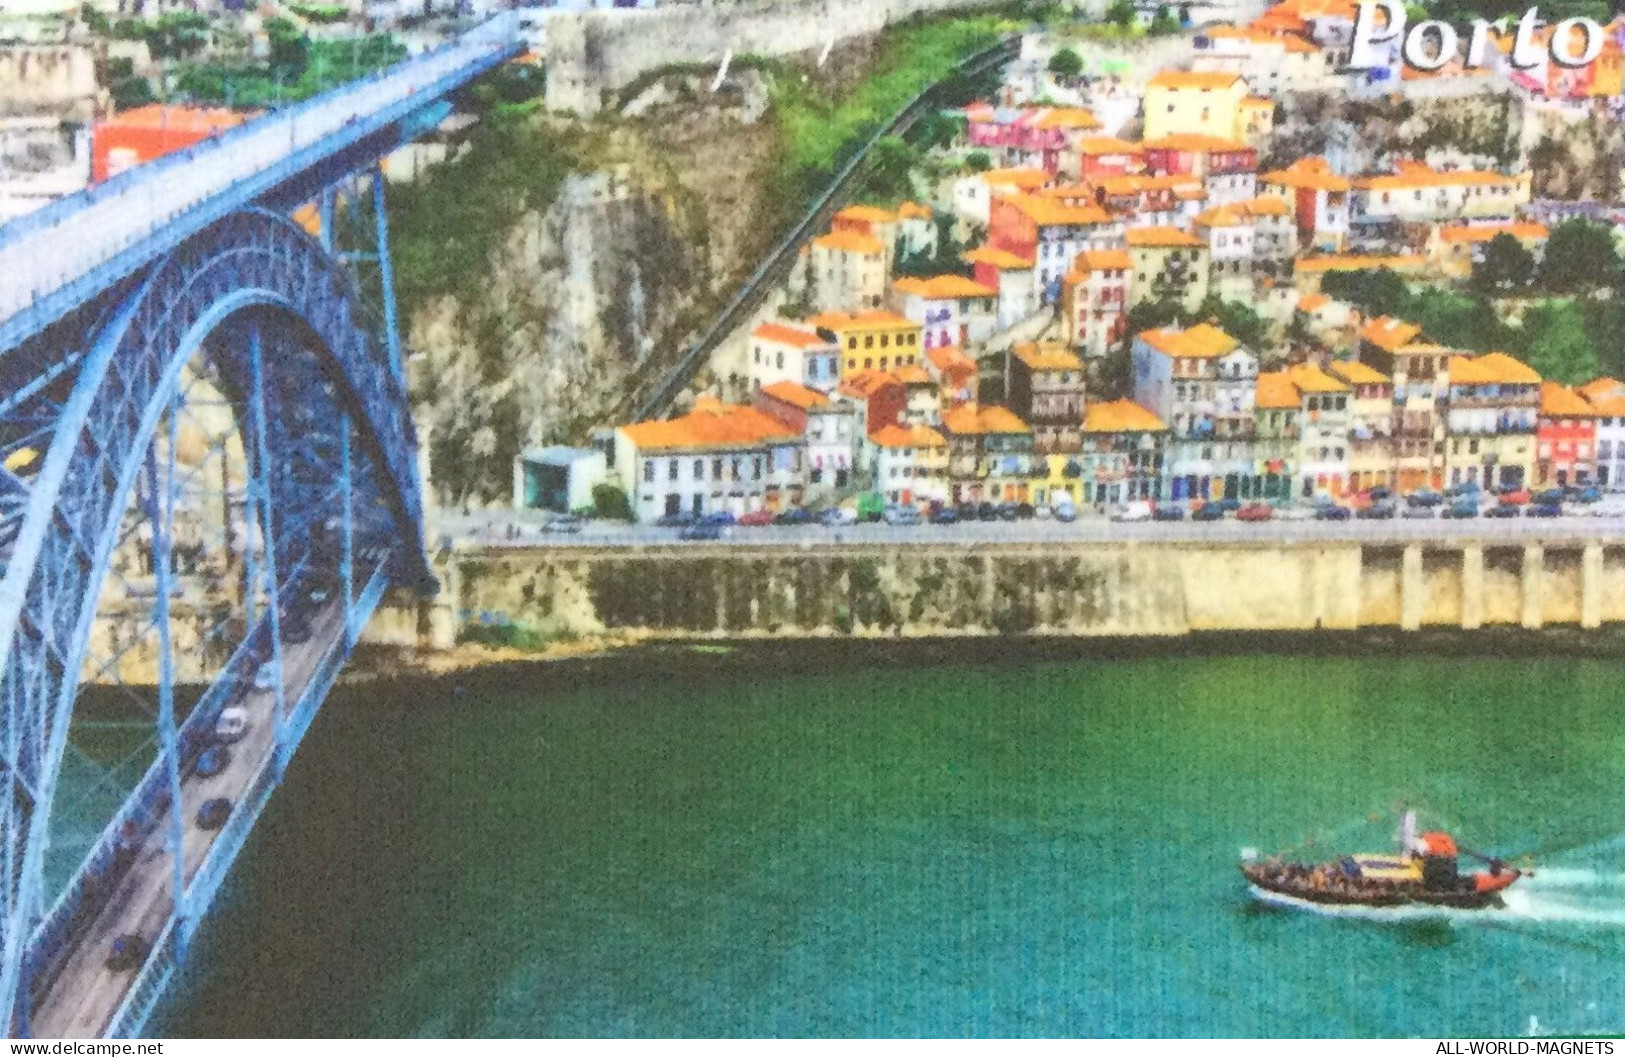 Porto Duoro River Bridges Boat City Vew Portugal Souvenir Fridge Magnet - Magnets